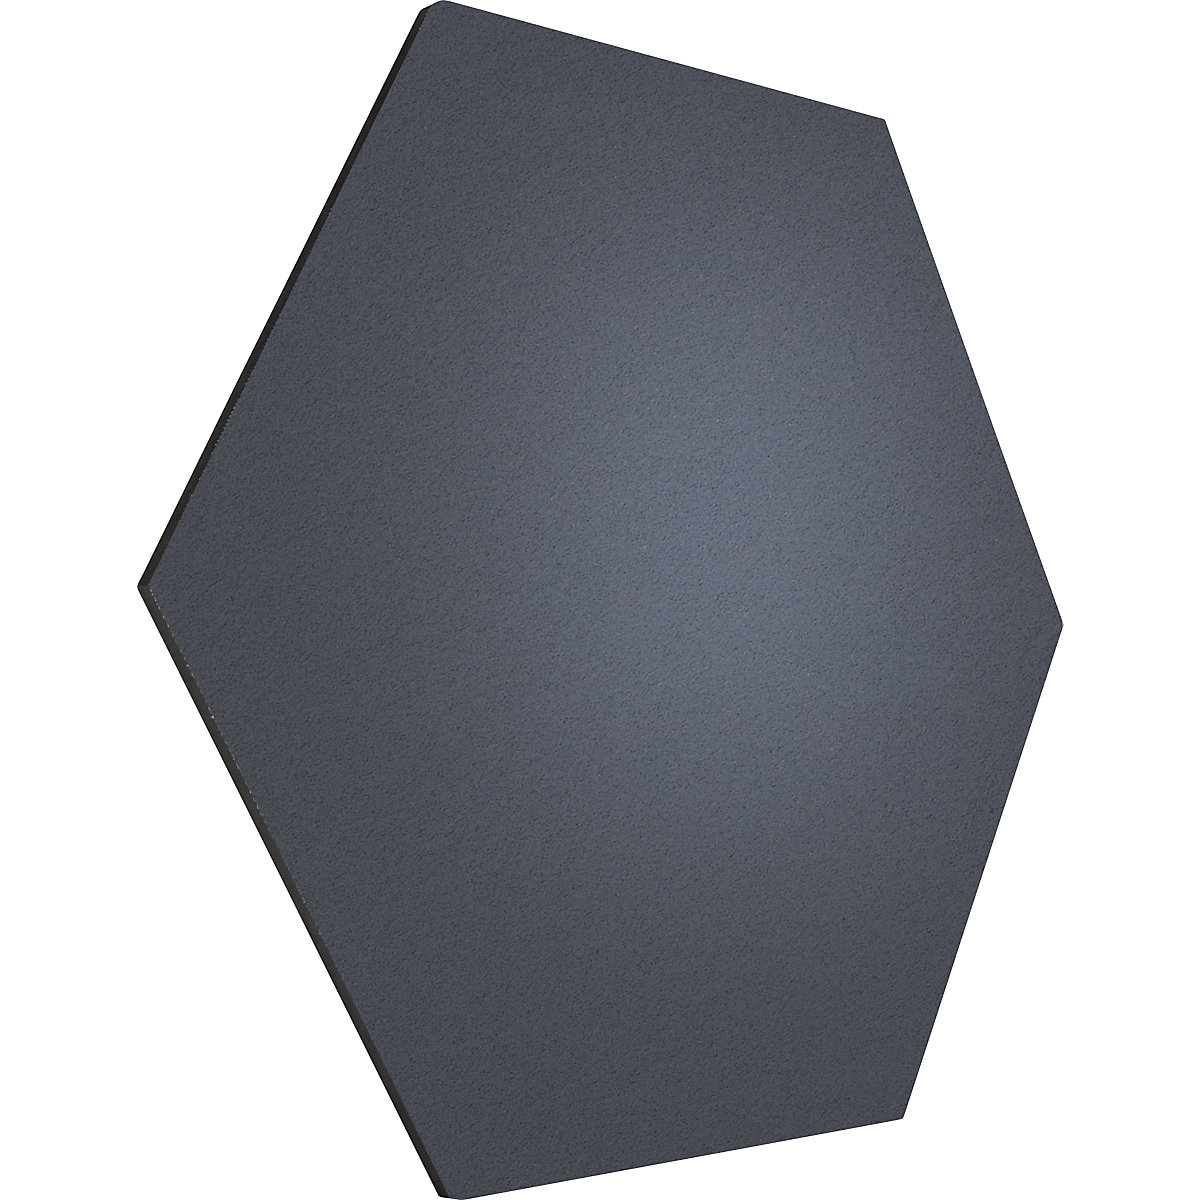 Design prikbord zeshoekig – Chameleon, kurk, b x h = 600 x 600 mm, antraciet-29